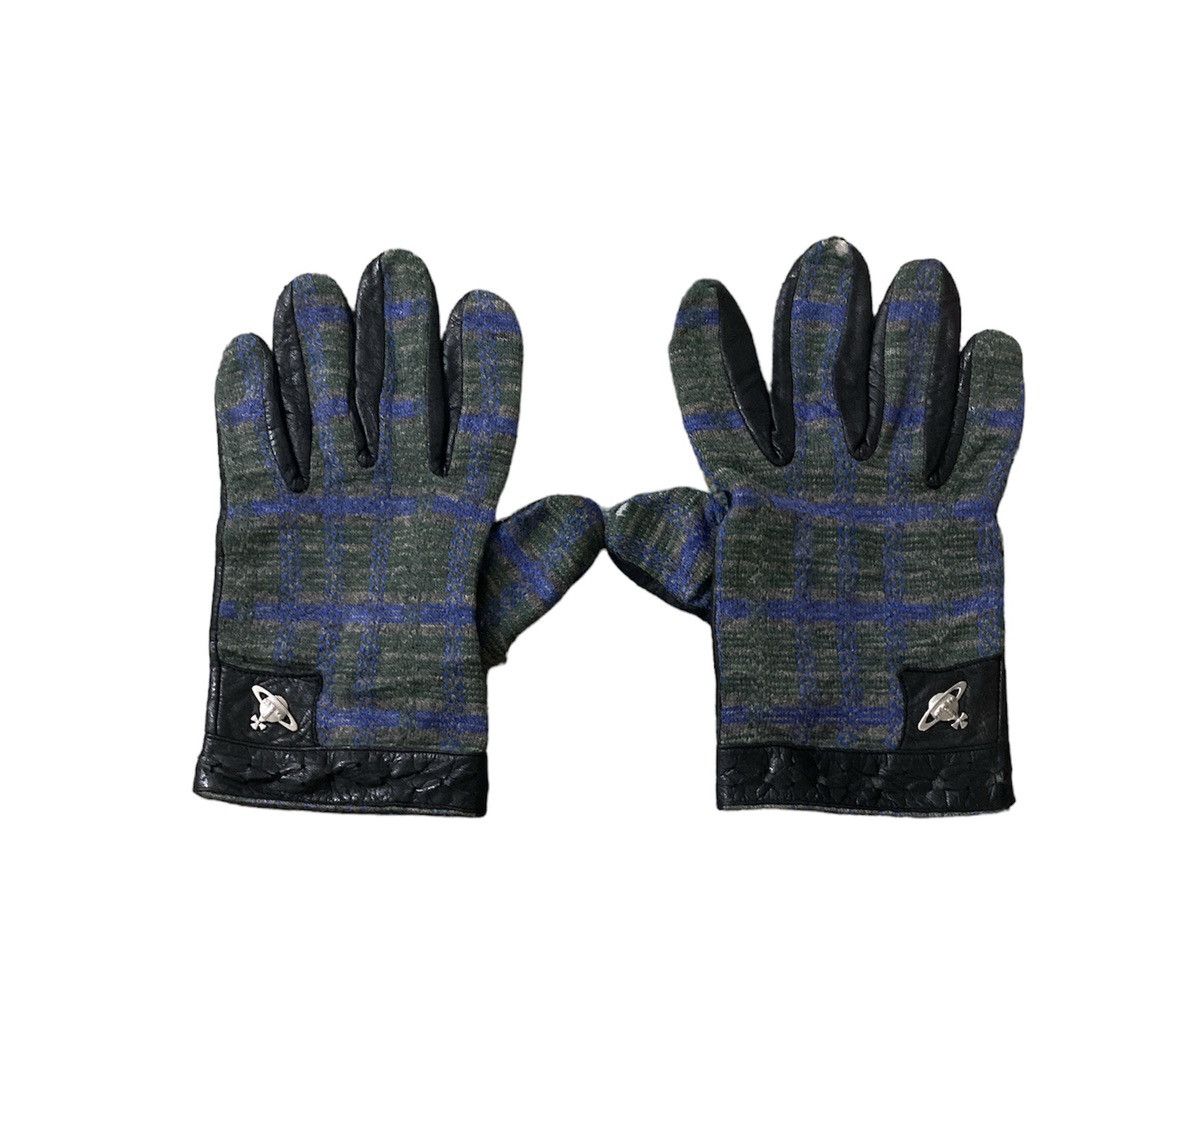 Vivienne Westwood Leather Gloves - 1